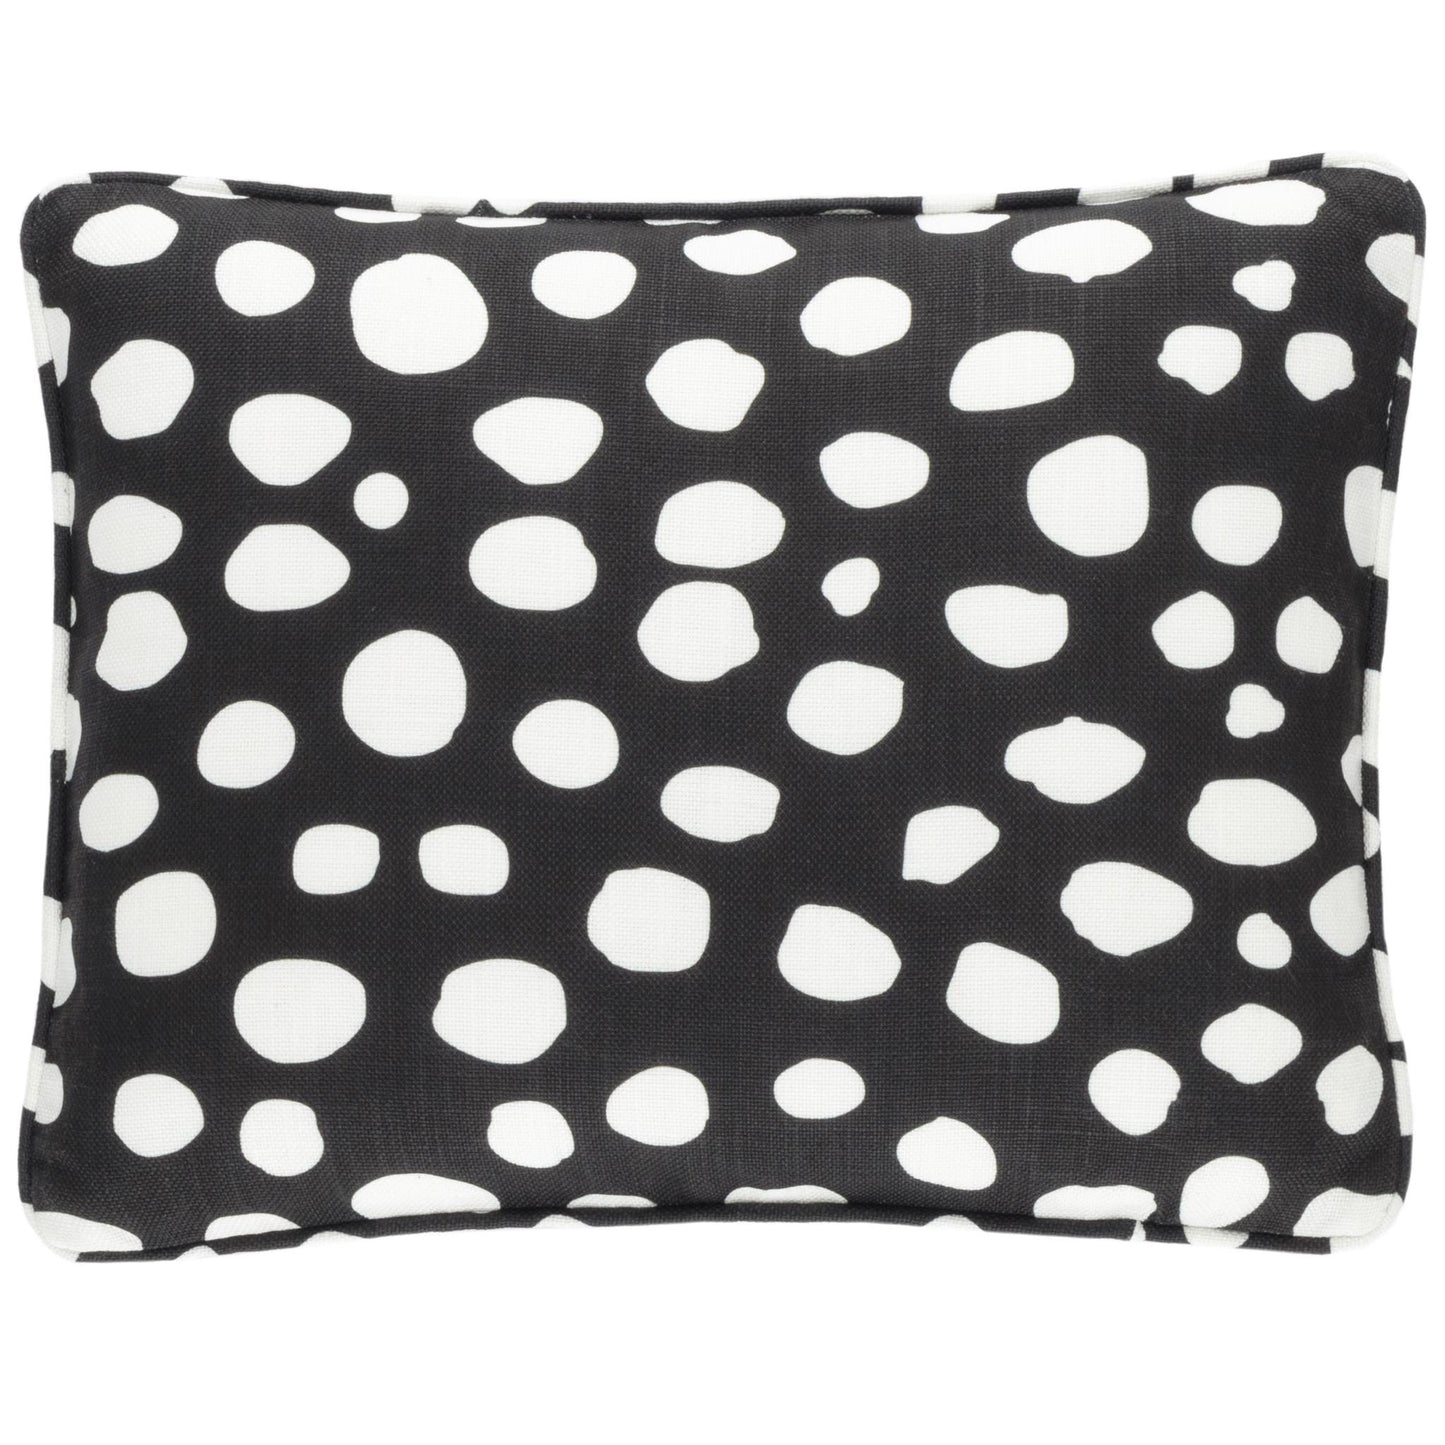 Pillow - "Spot On" Black - Indoor/Outdoor - 16" Lumbar